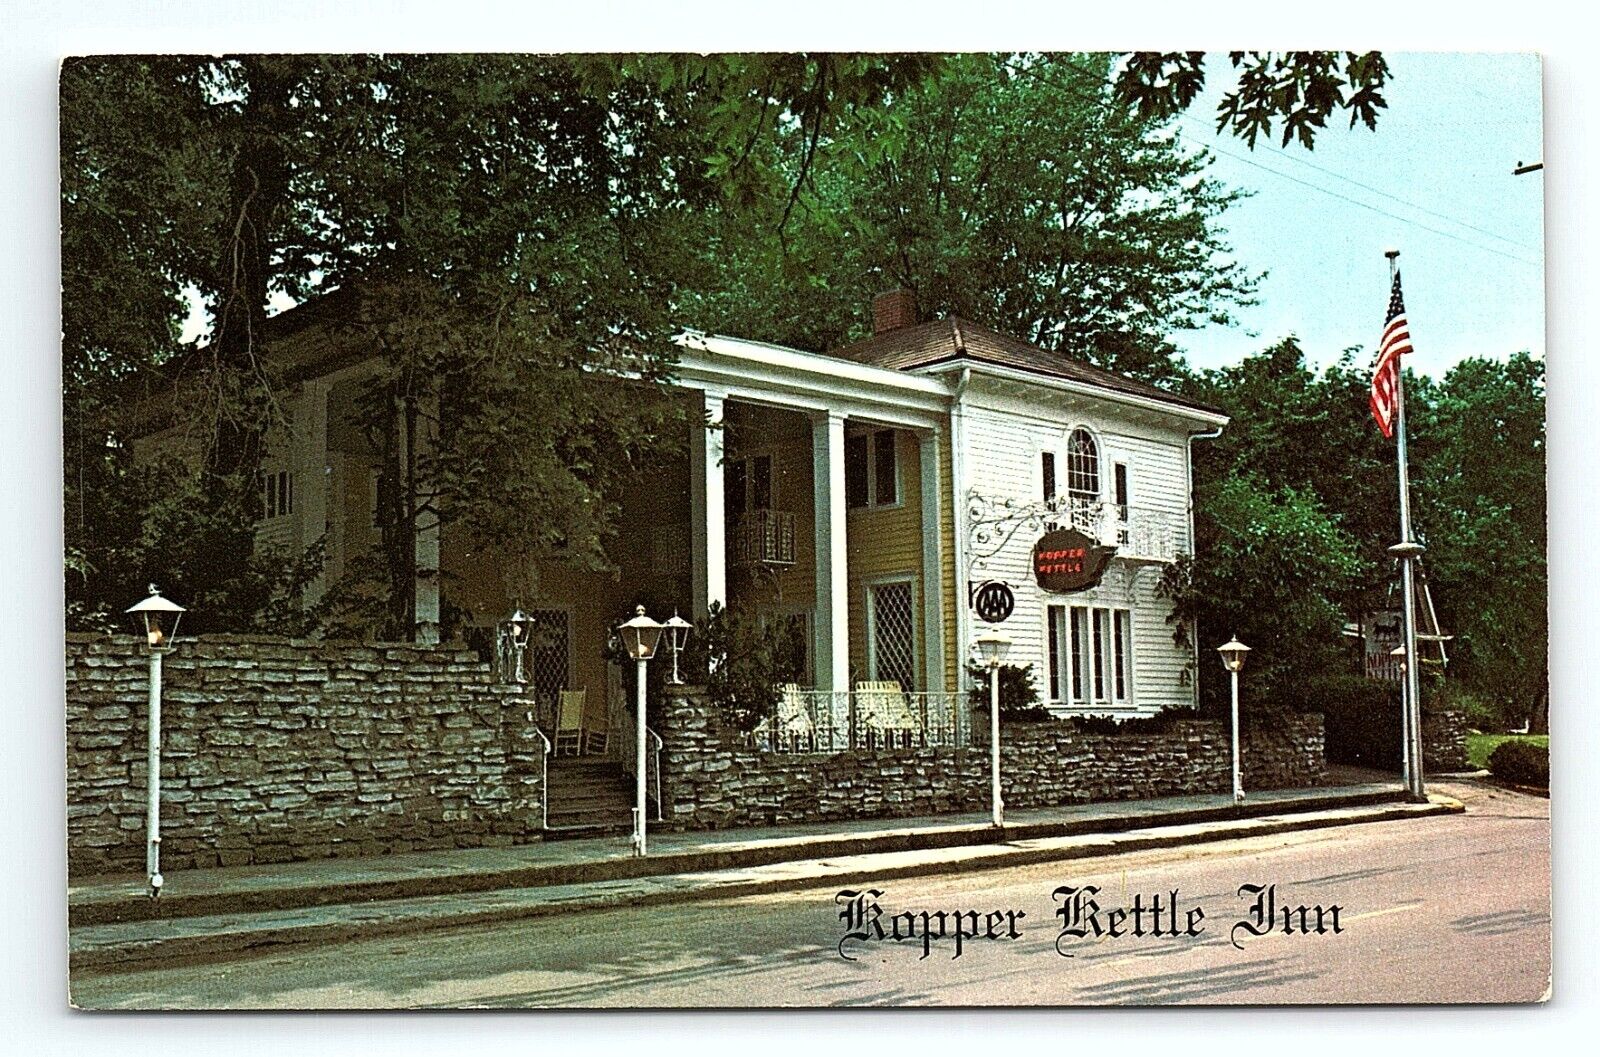 Kopper Kettle Inn Morristown Indiana Vintage Postcard